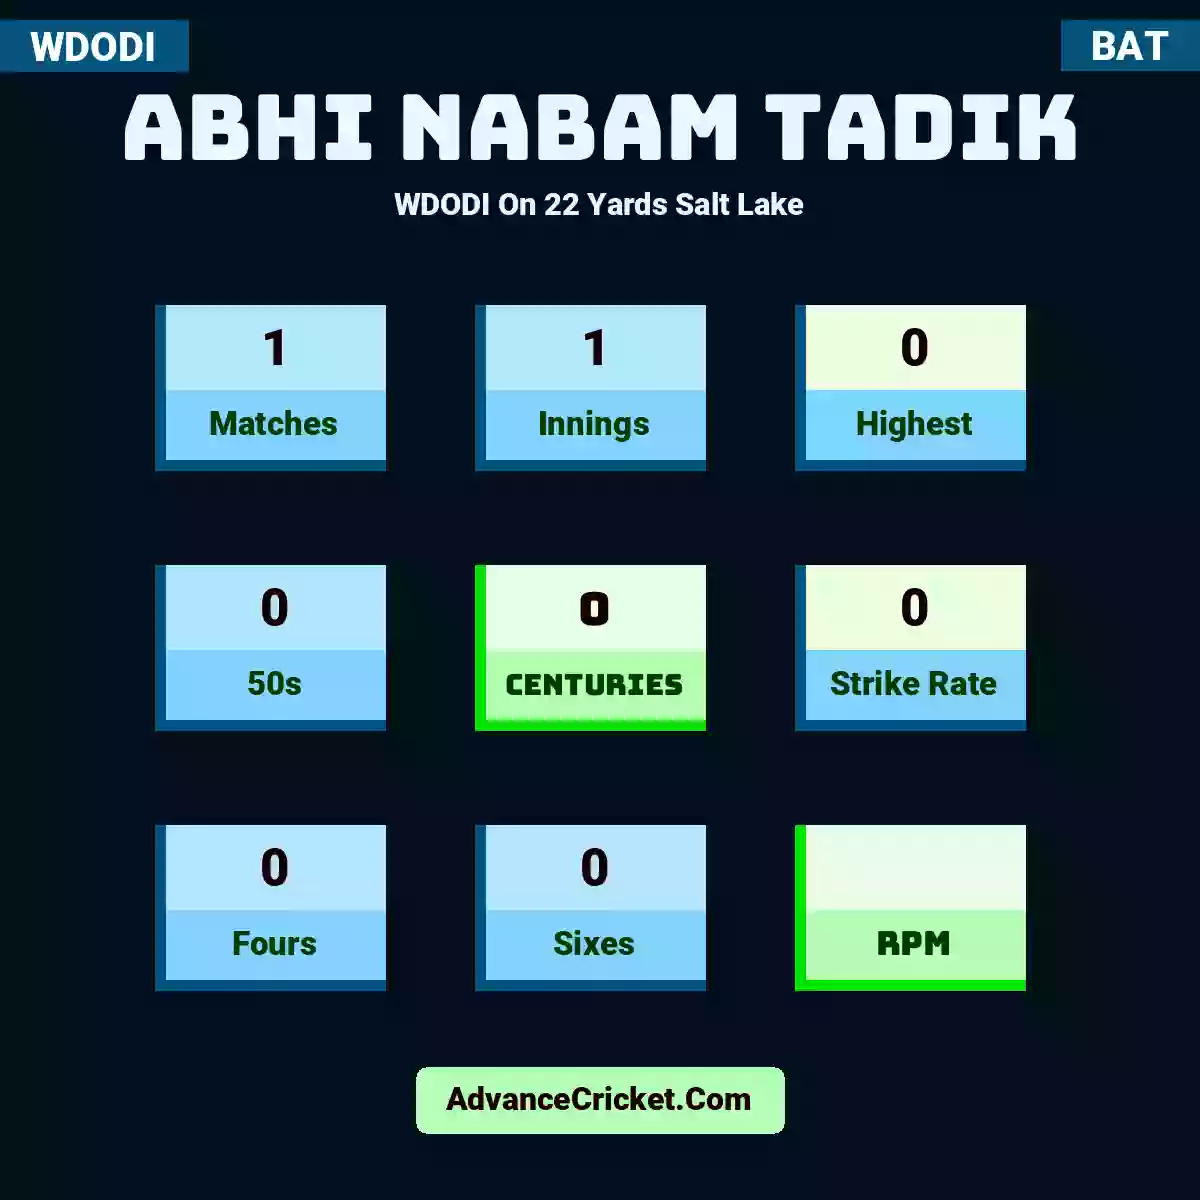 Abhi Nabam Tadik WDODI  On 22 Yards Salt Lake, Abhi Nabam Tadik played 1 matches, scored 0 runs as highest, 0 half-centuries, and 0 centuries, with a strike rate of 0. A.Tadik hit 0 fours and 0 sixes.